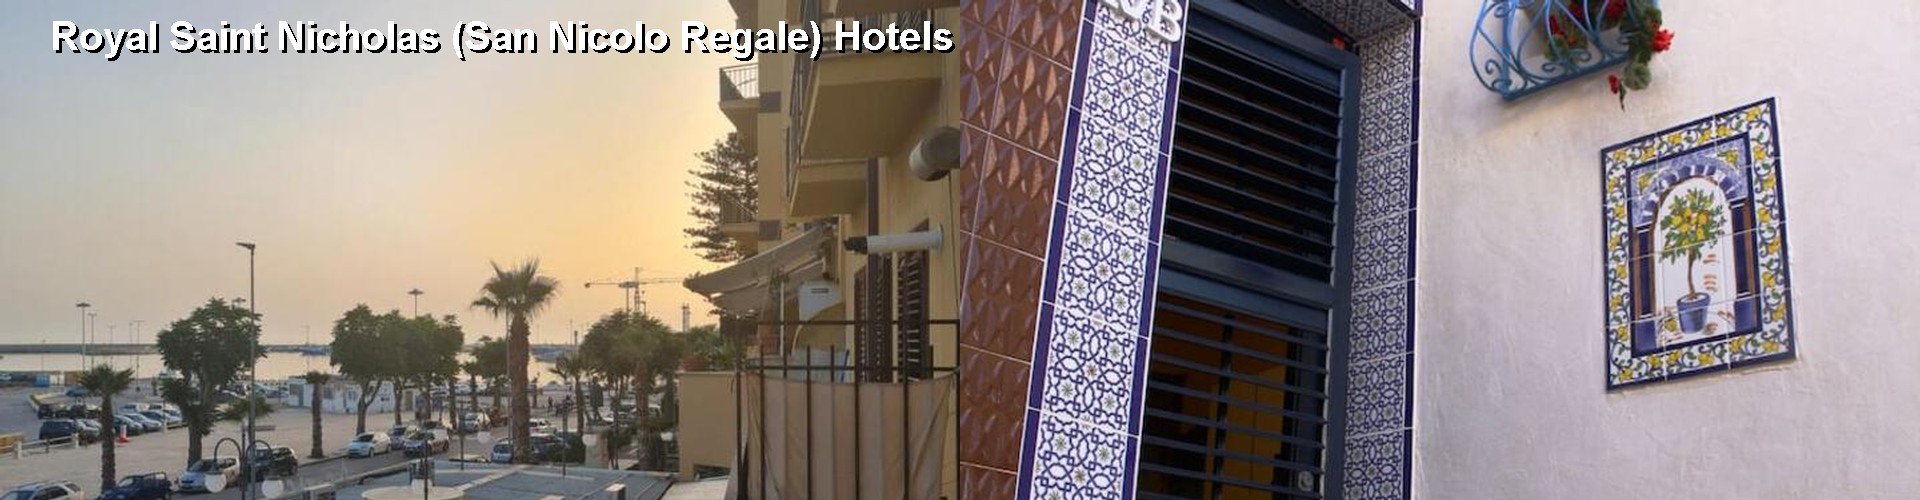 5 Best Hotels near Royal Saint Nicholas (San Nicolo Regale)